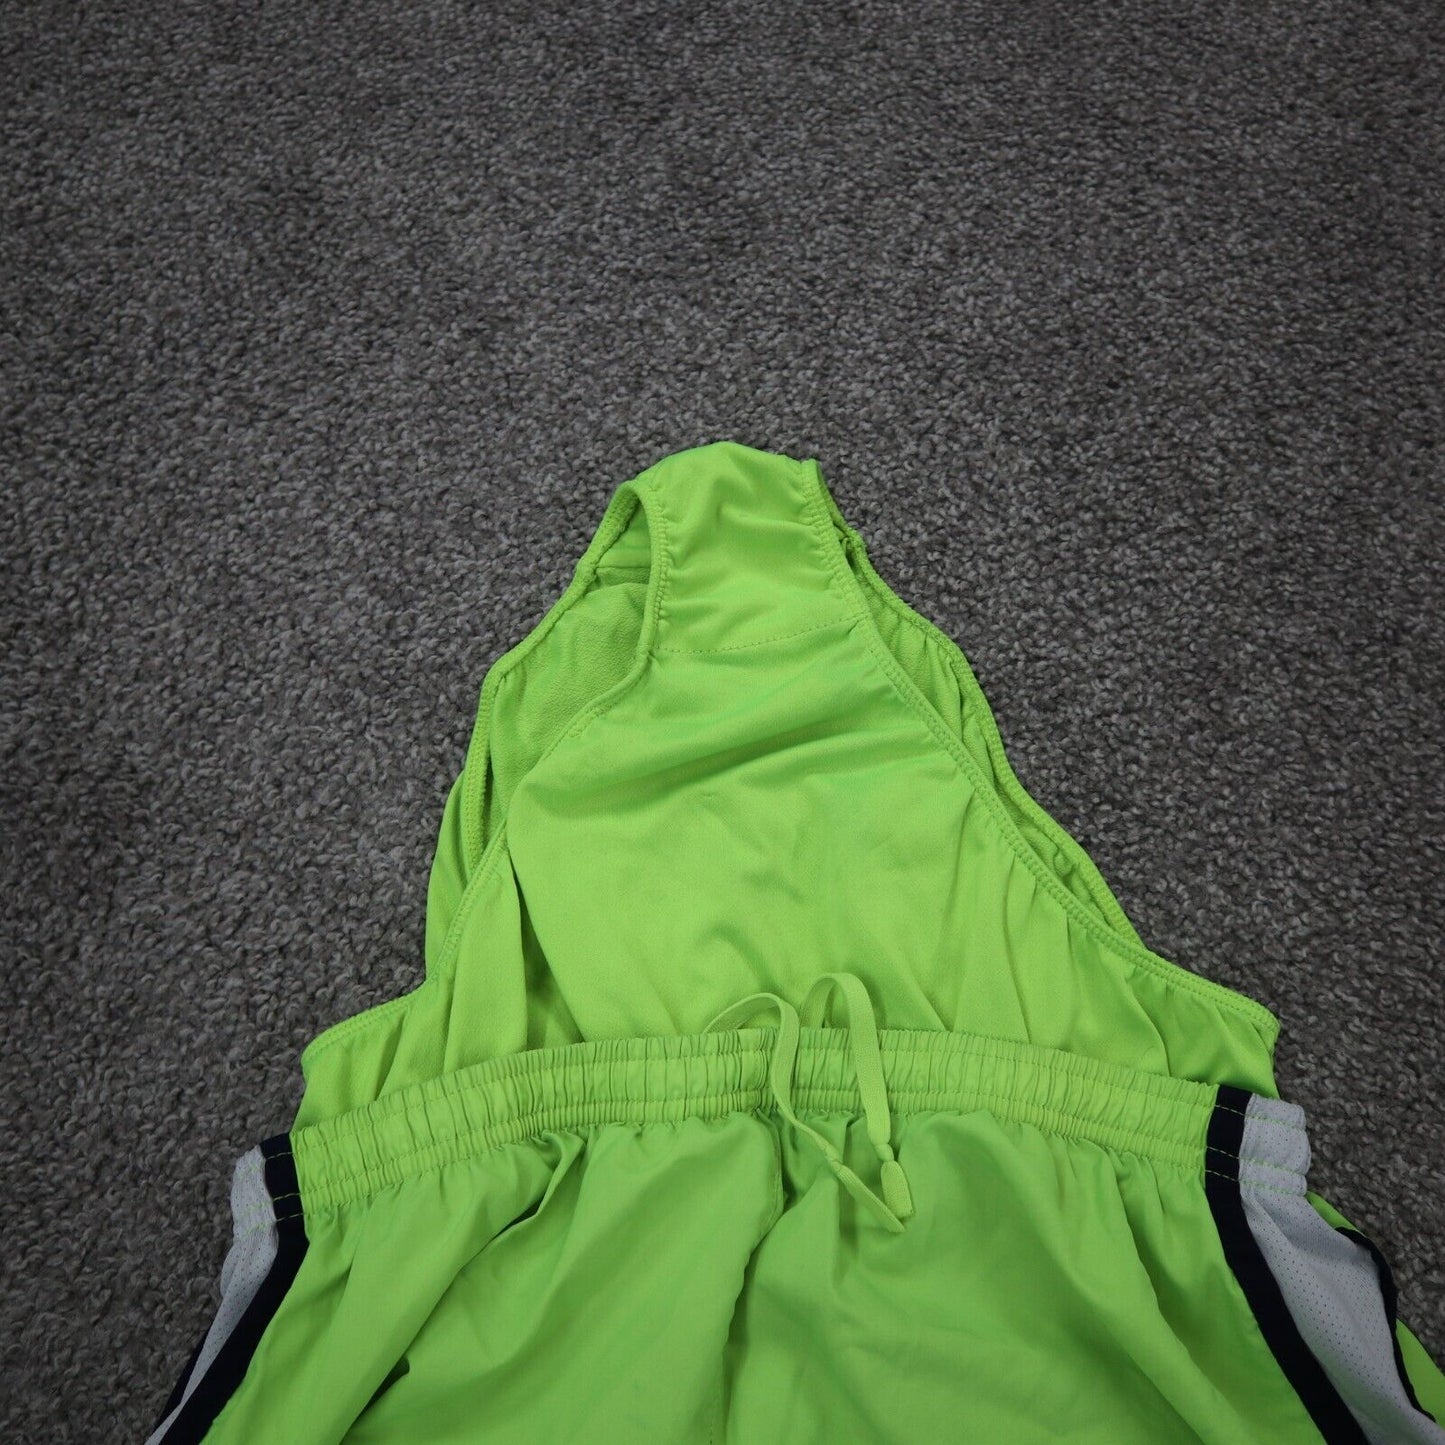 Nike Dri Fit Womens Athletic Shorts Elastic Waist Running Green Size Medium